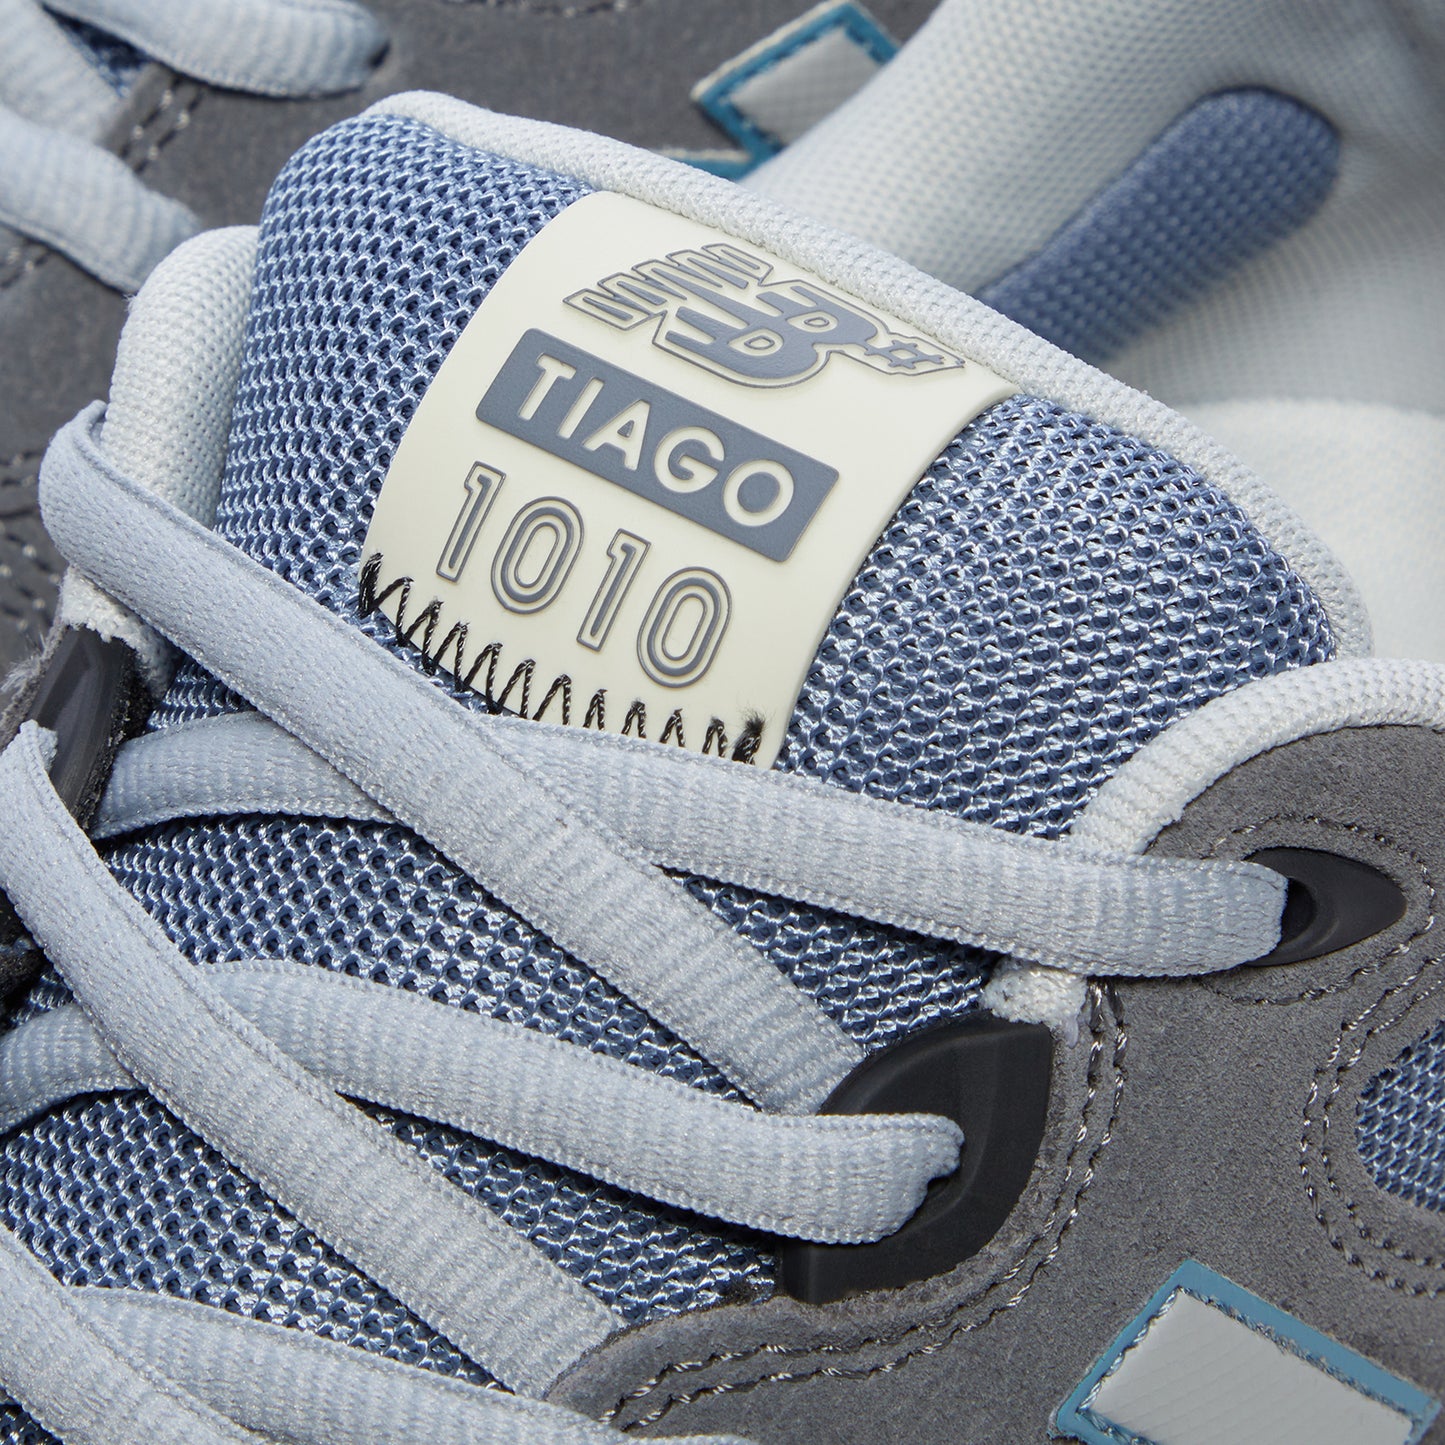 New Balance Numeric Tiago Lemos 1010 (Grey/Blue)